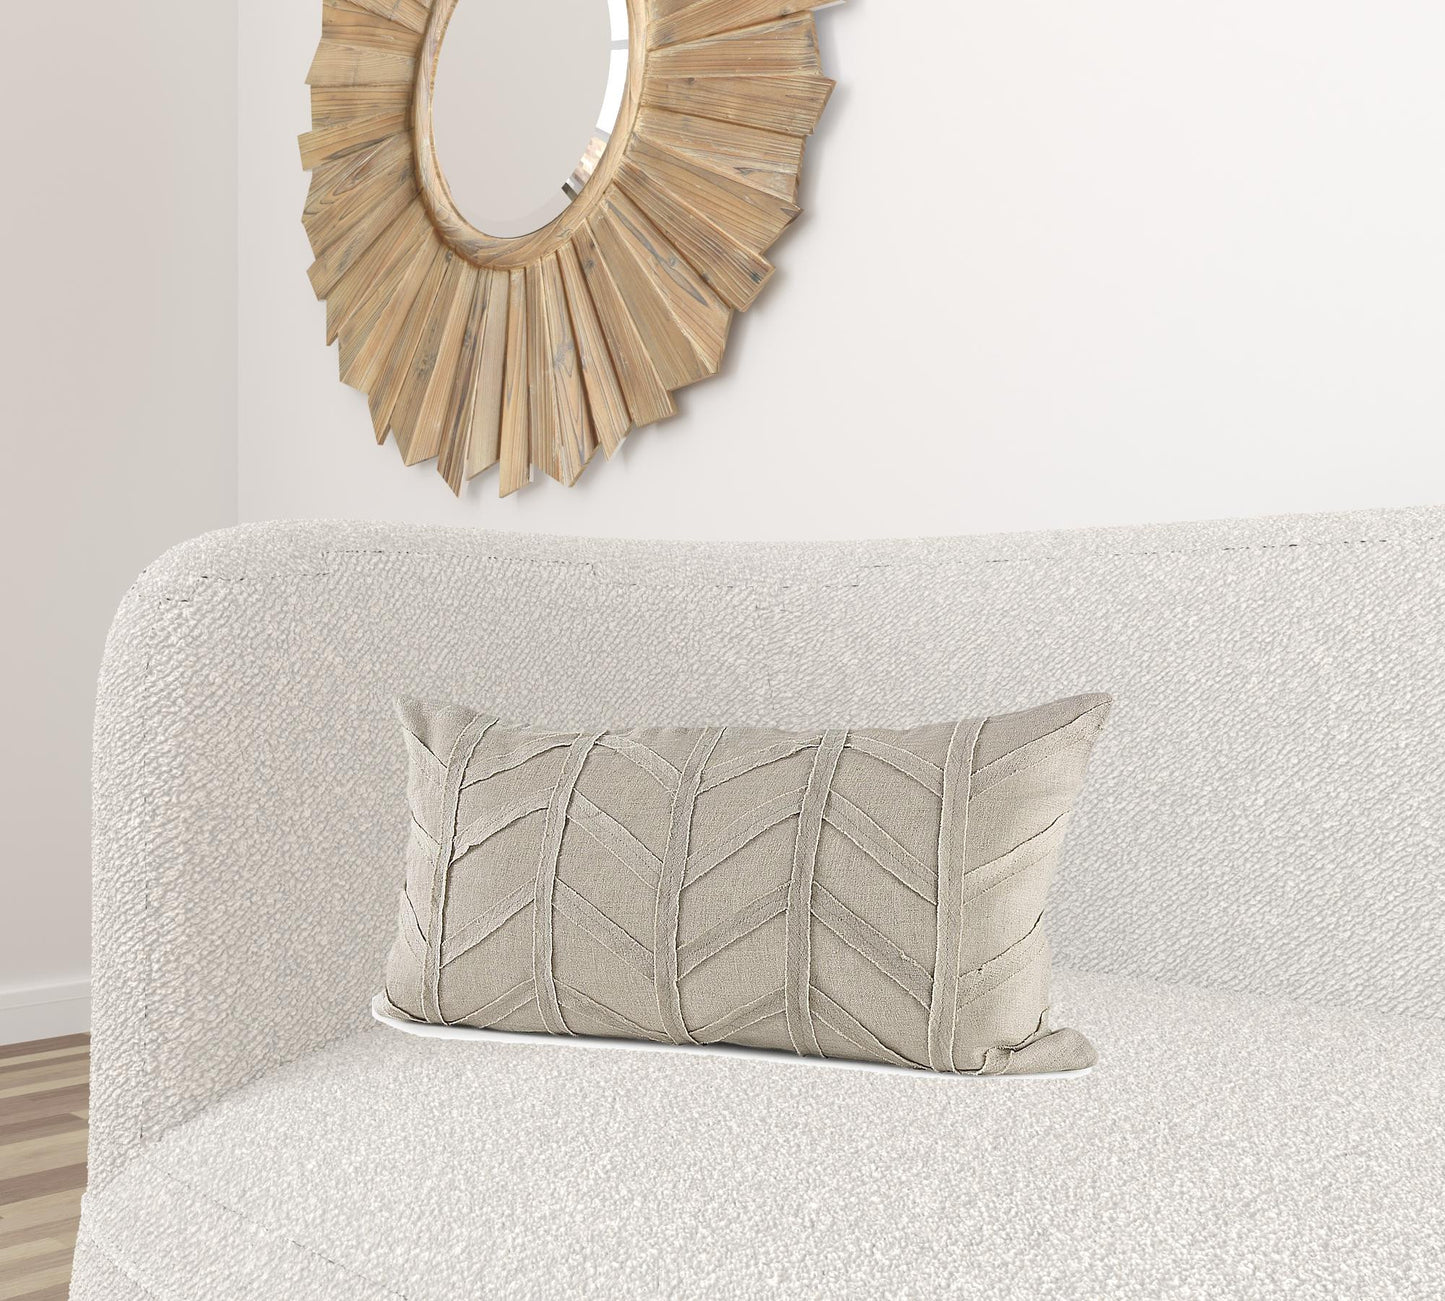 Light Gray Chevron Textured Lumbar Pillow Cover